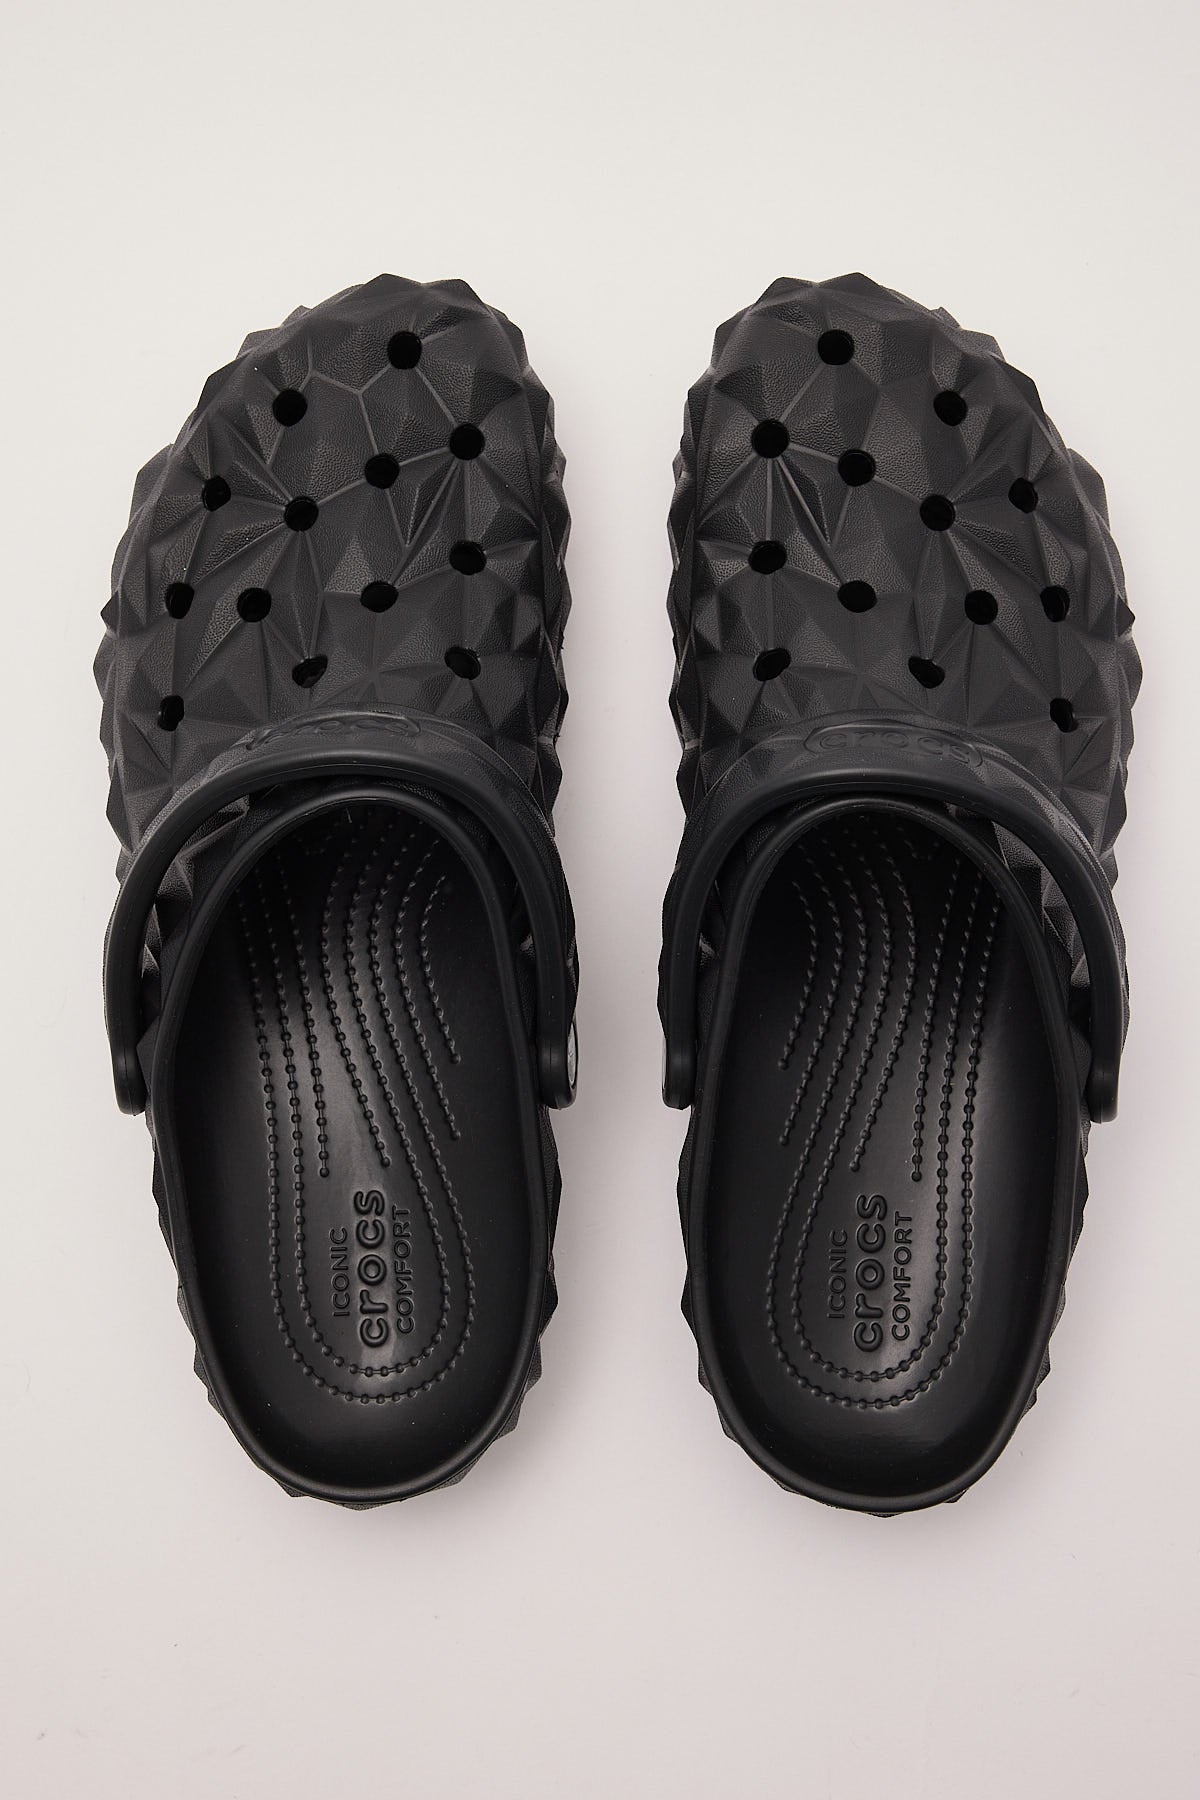 Crocs Mens Classic Geometric Clog Black